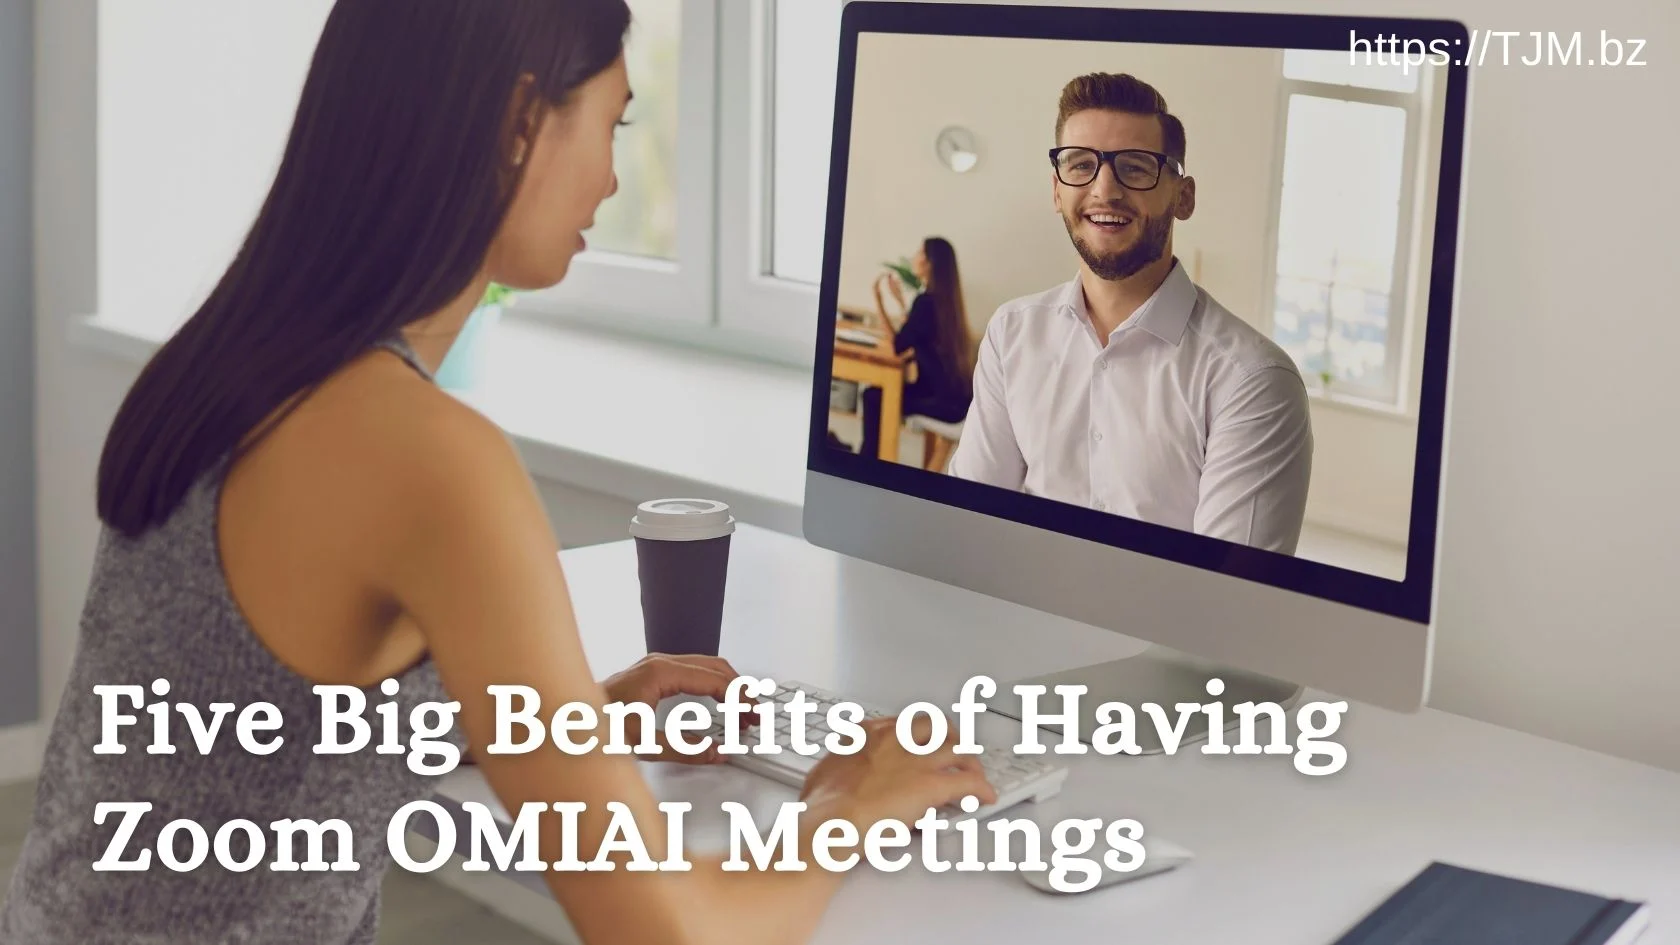 Zoom Omiai Meetings